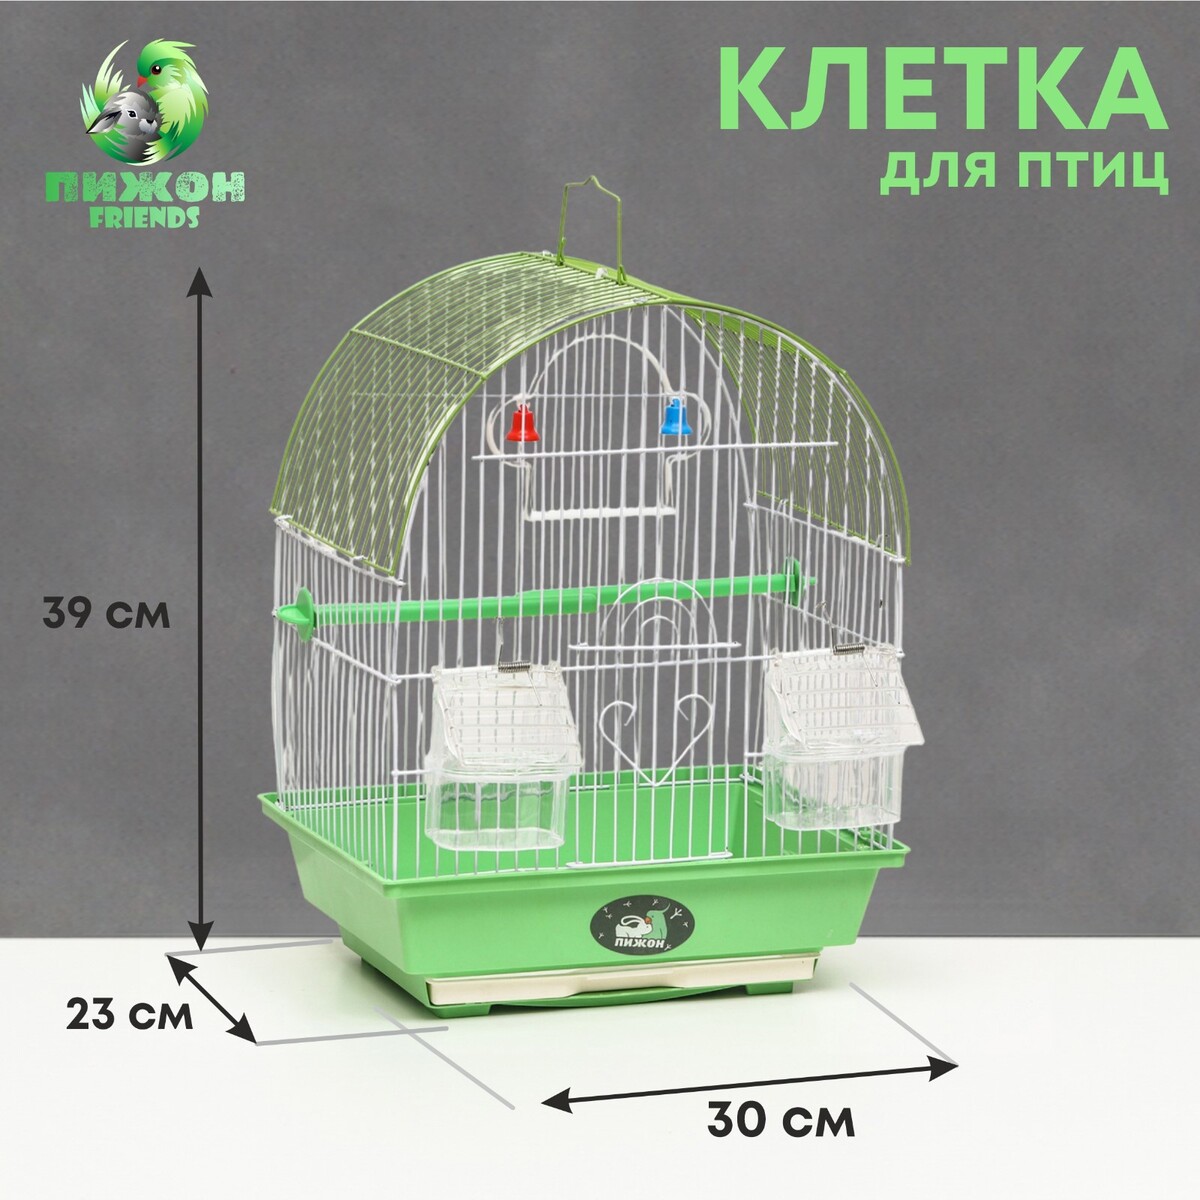 Клетка для птиц укомплектованная bd-1/3c, 30 х 23 х 39 см, зеленая kopмушка для птиц 22 × 17 × 17 см разобранная